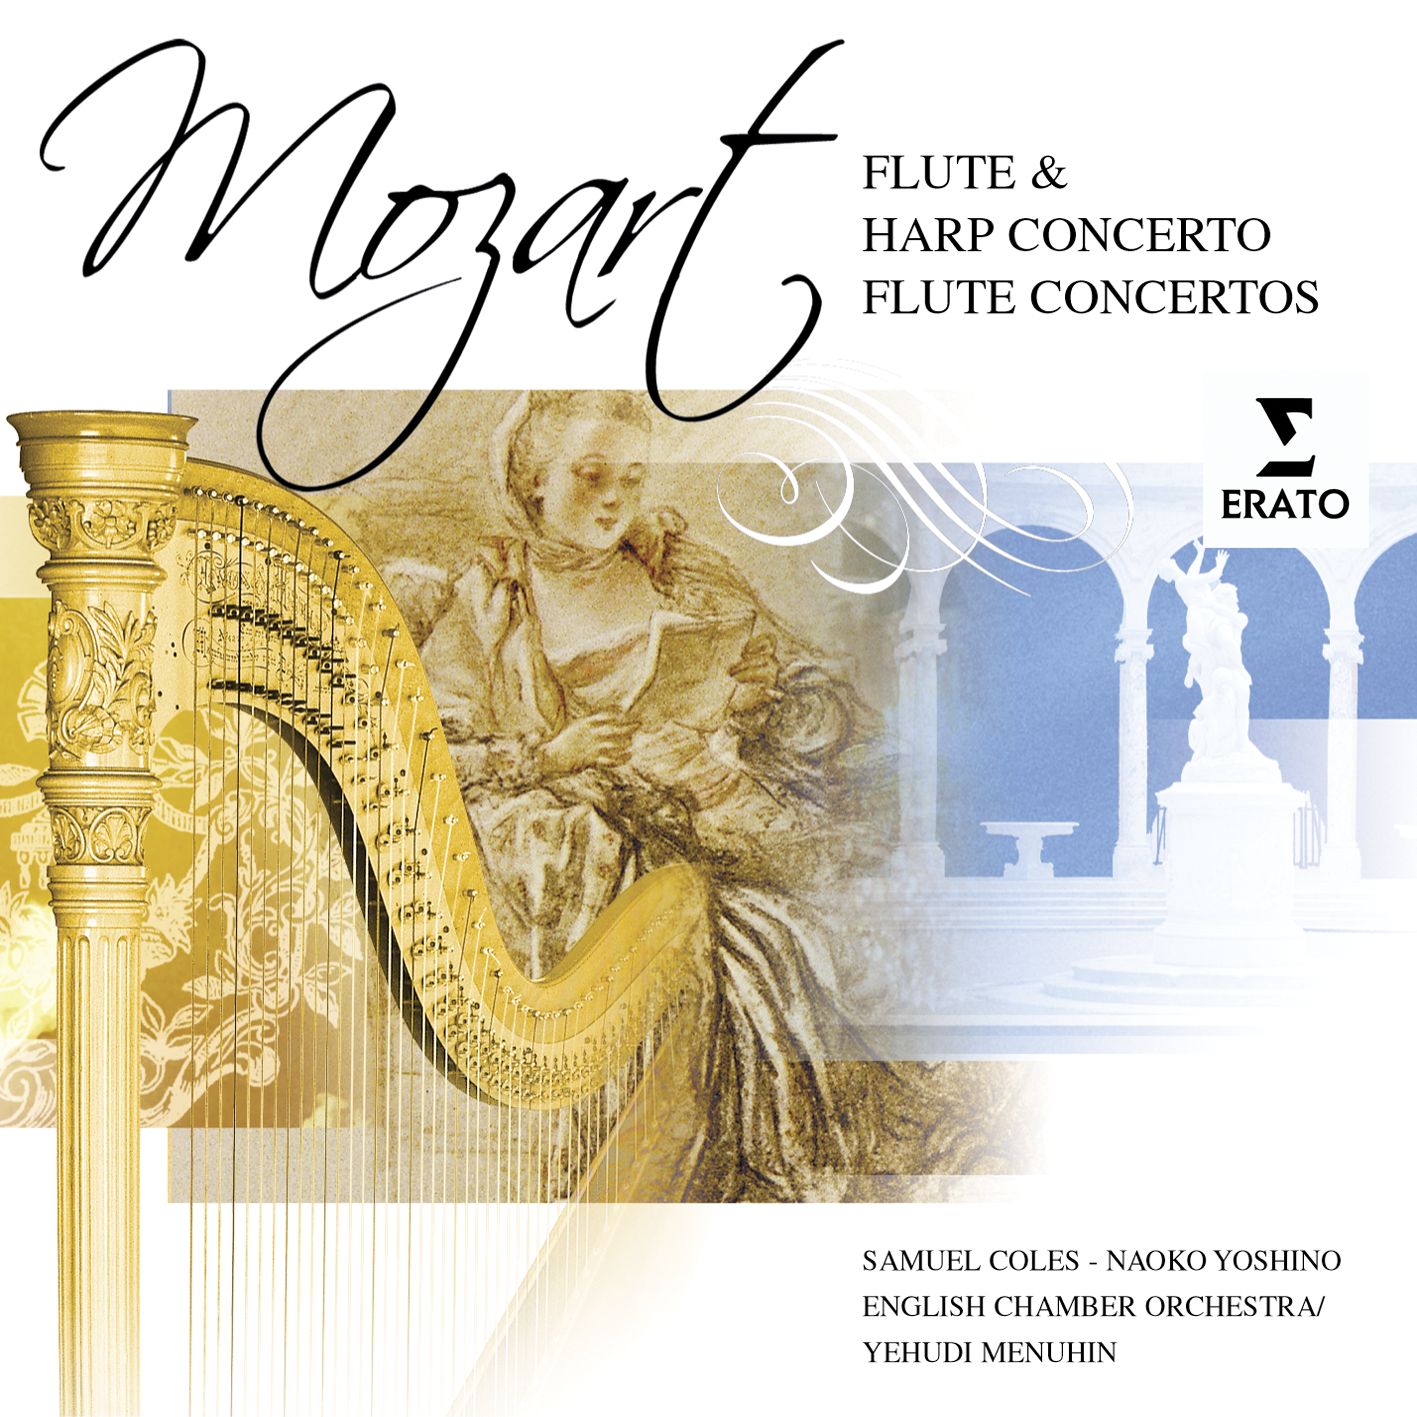 Concerto for Flute and Orchestra No. 2 in D K314/285d: I. Allegro aperto